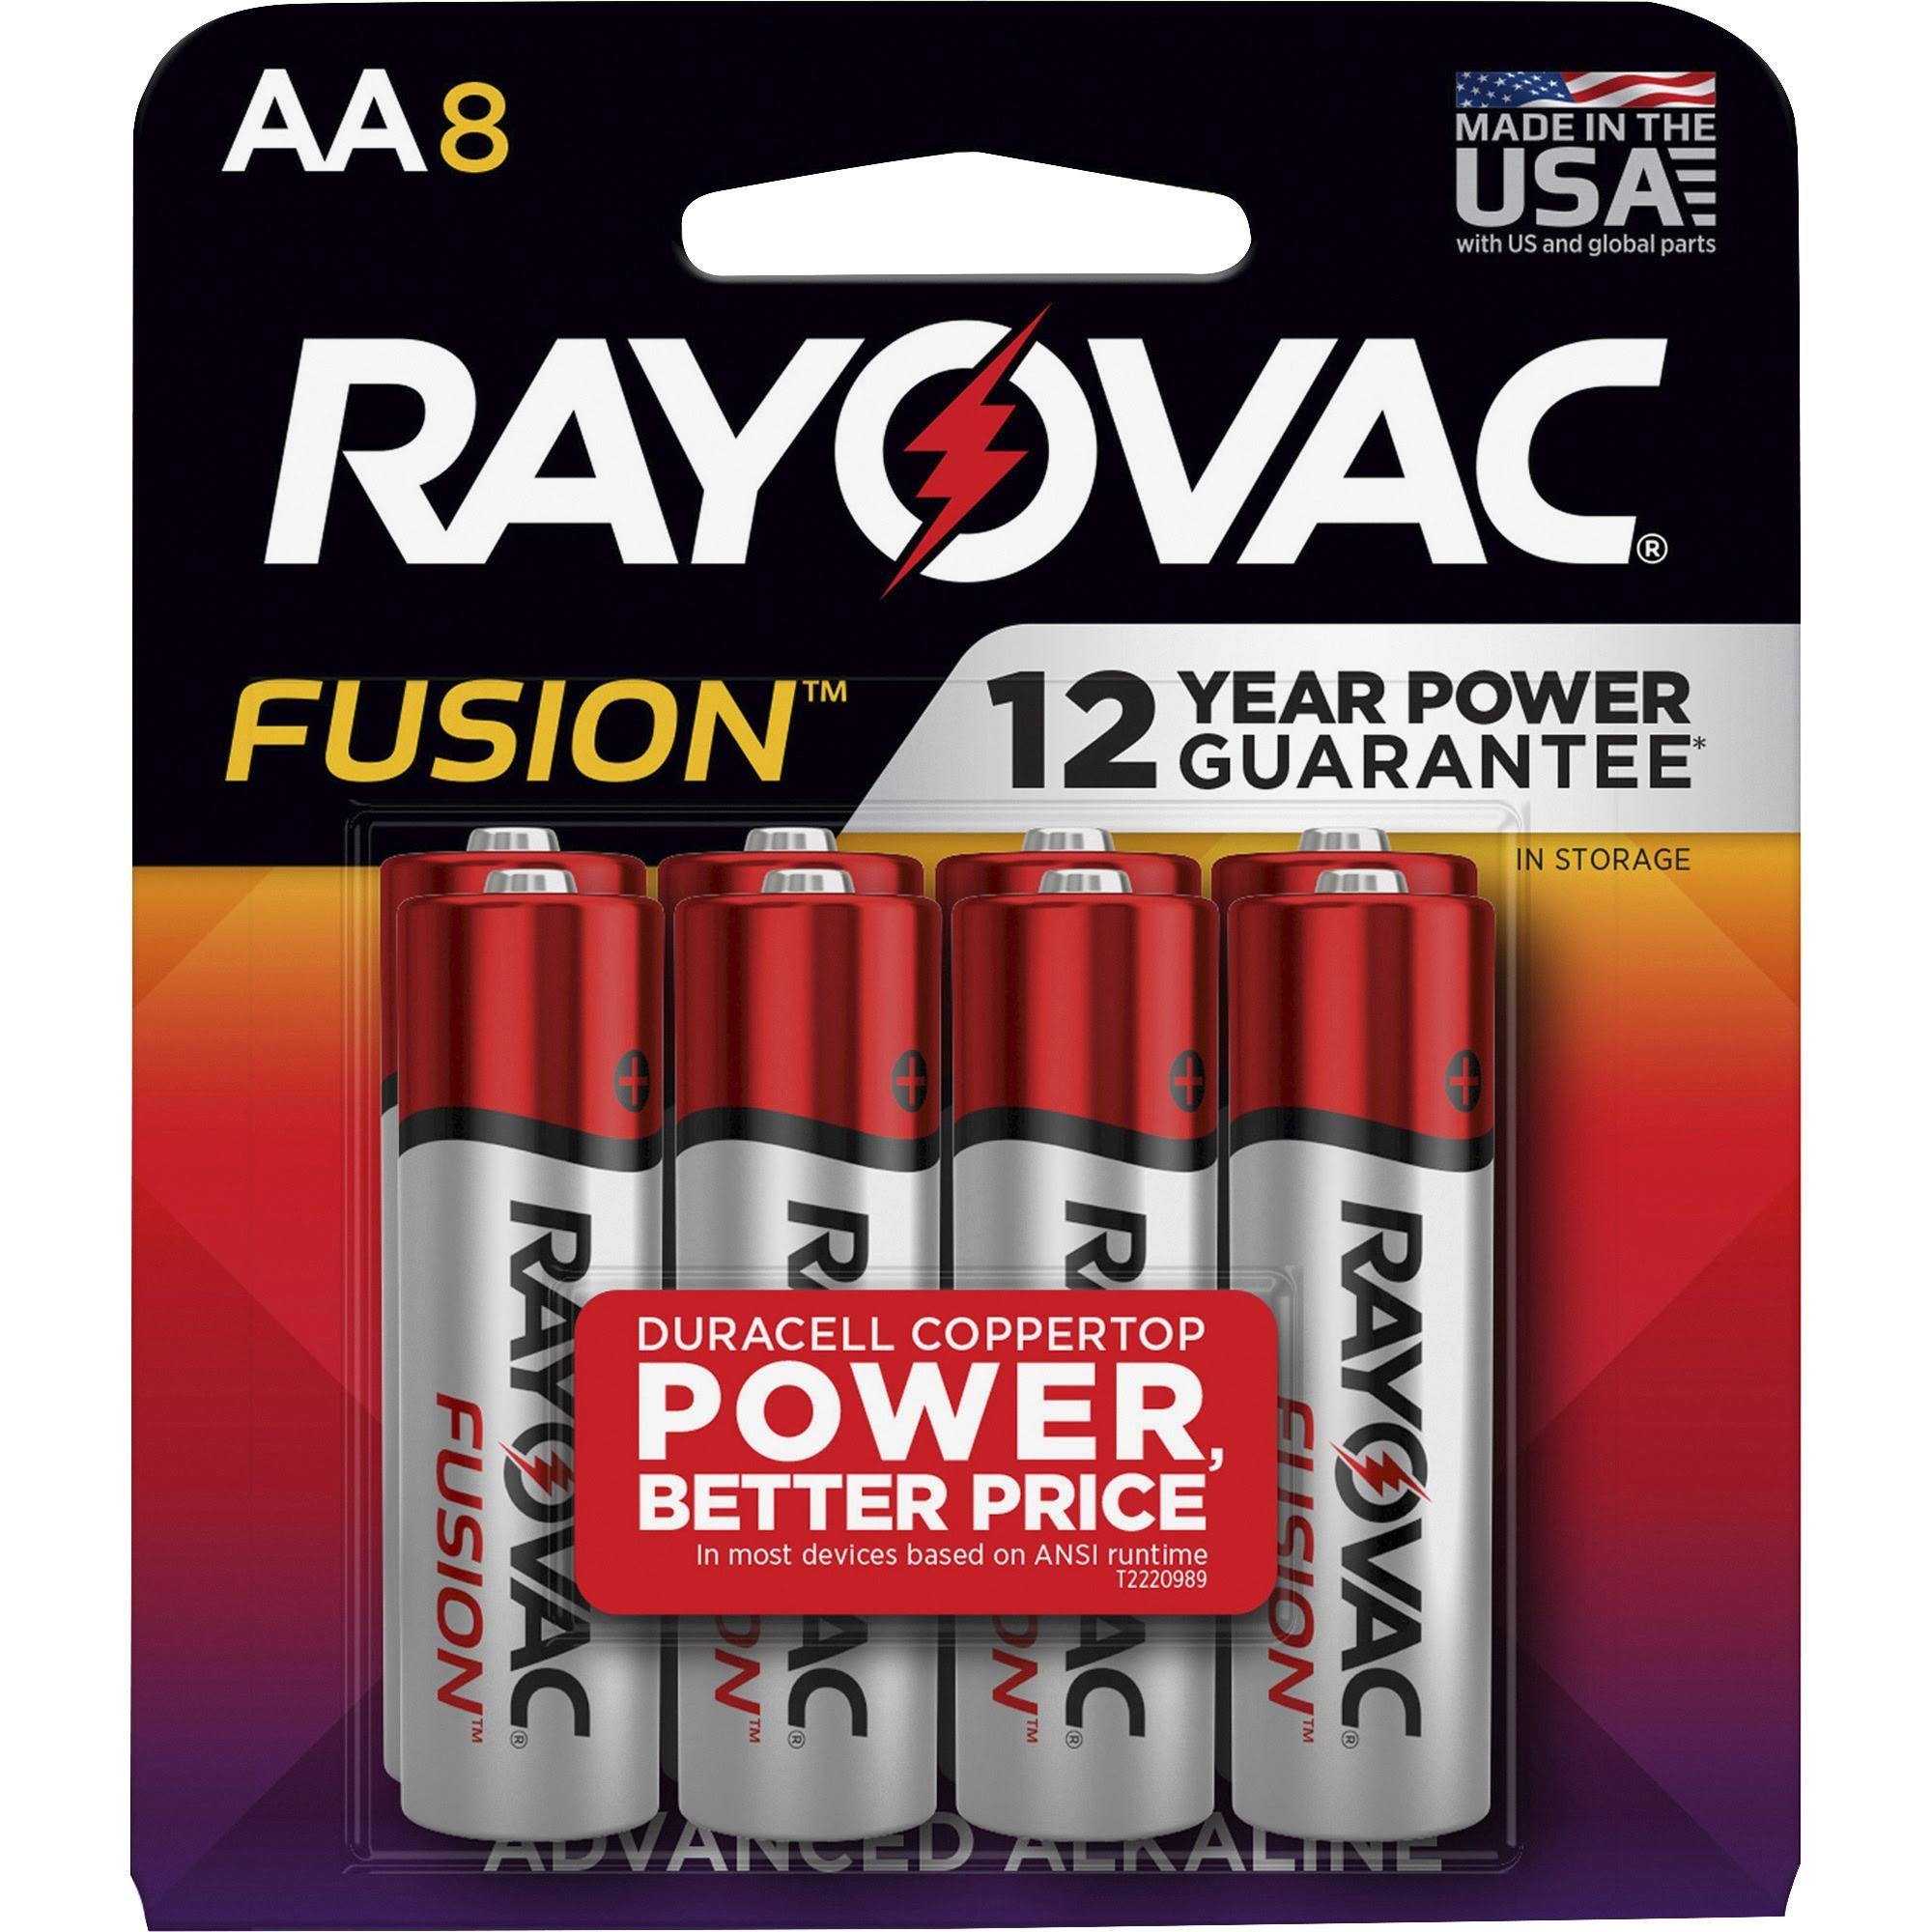 Rayovac Fusion High Power Alkaline Batteries - AA, 8pk